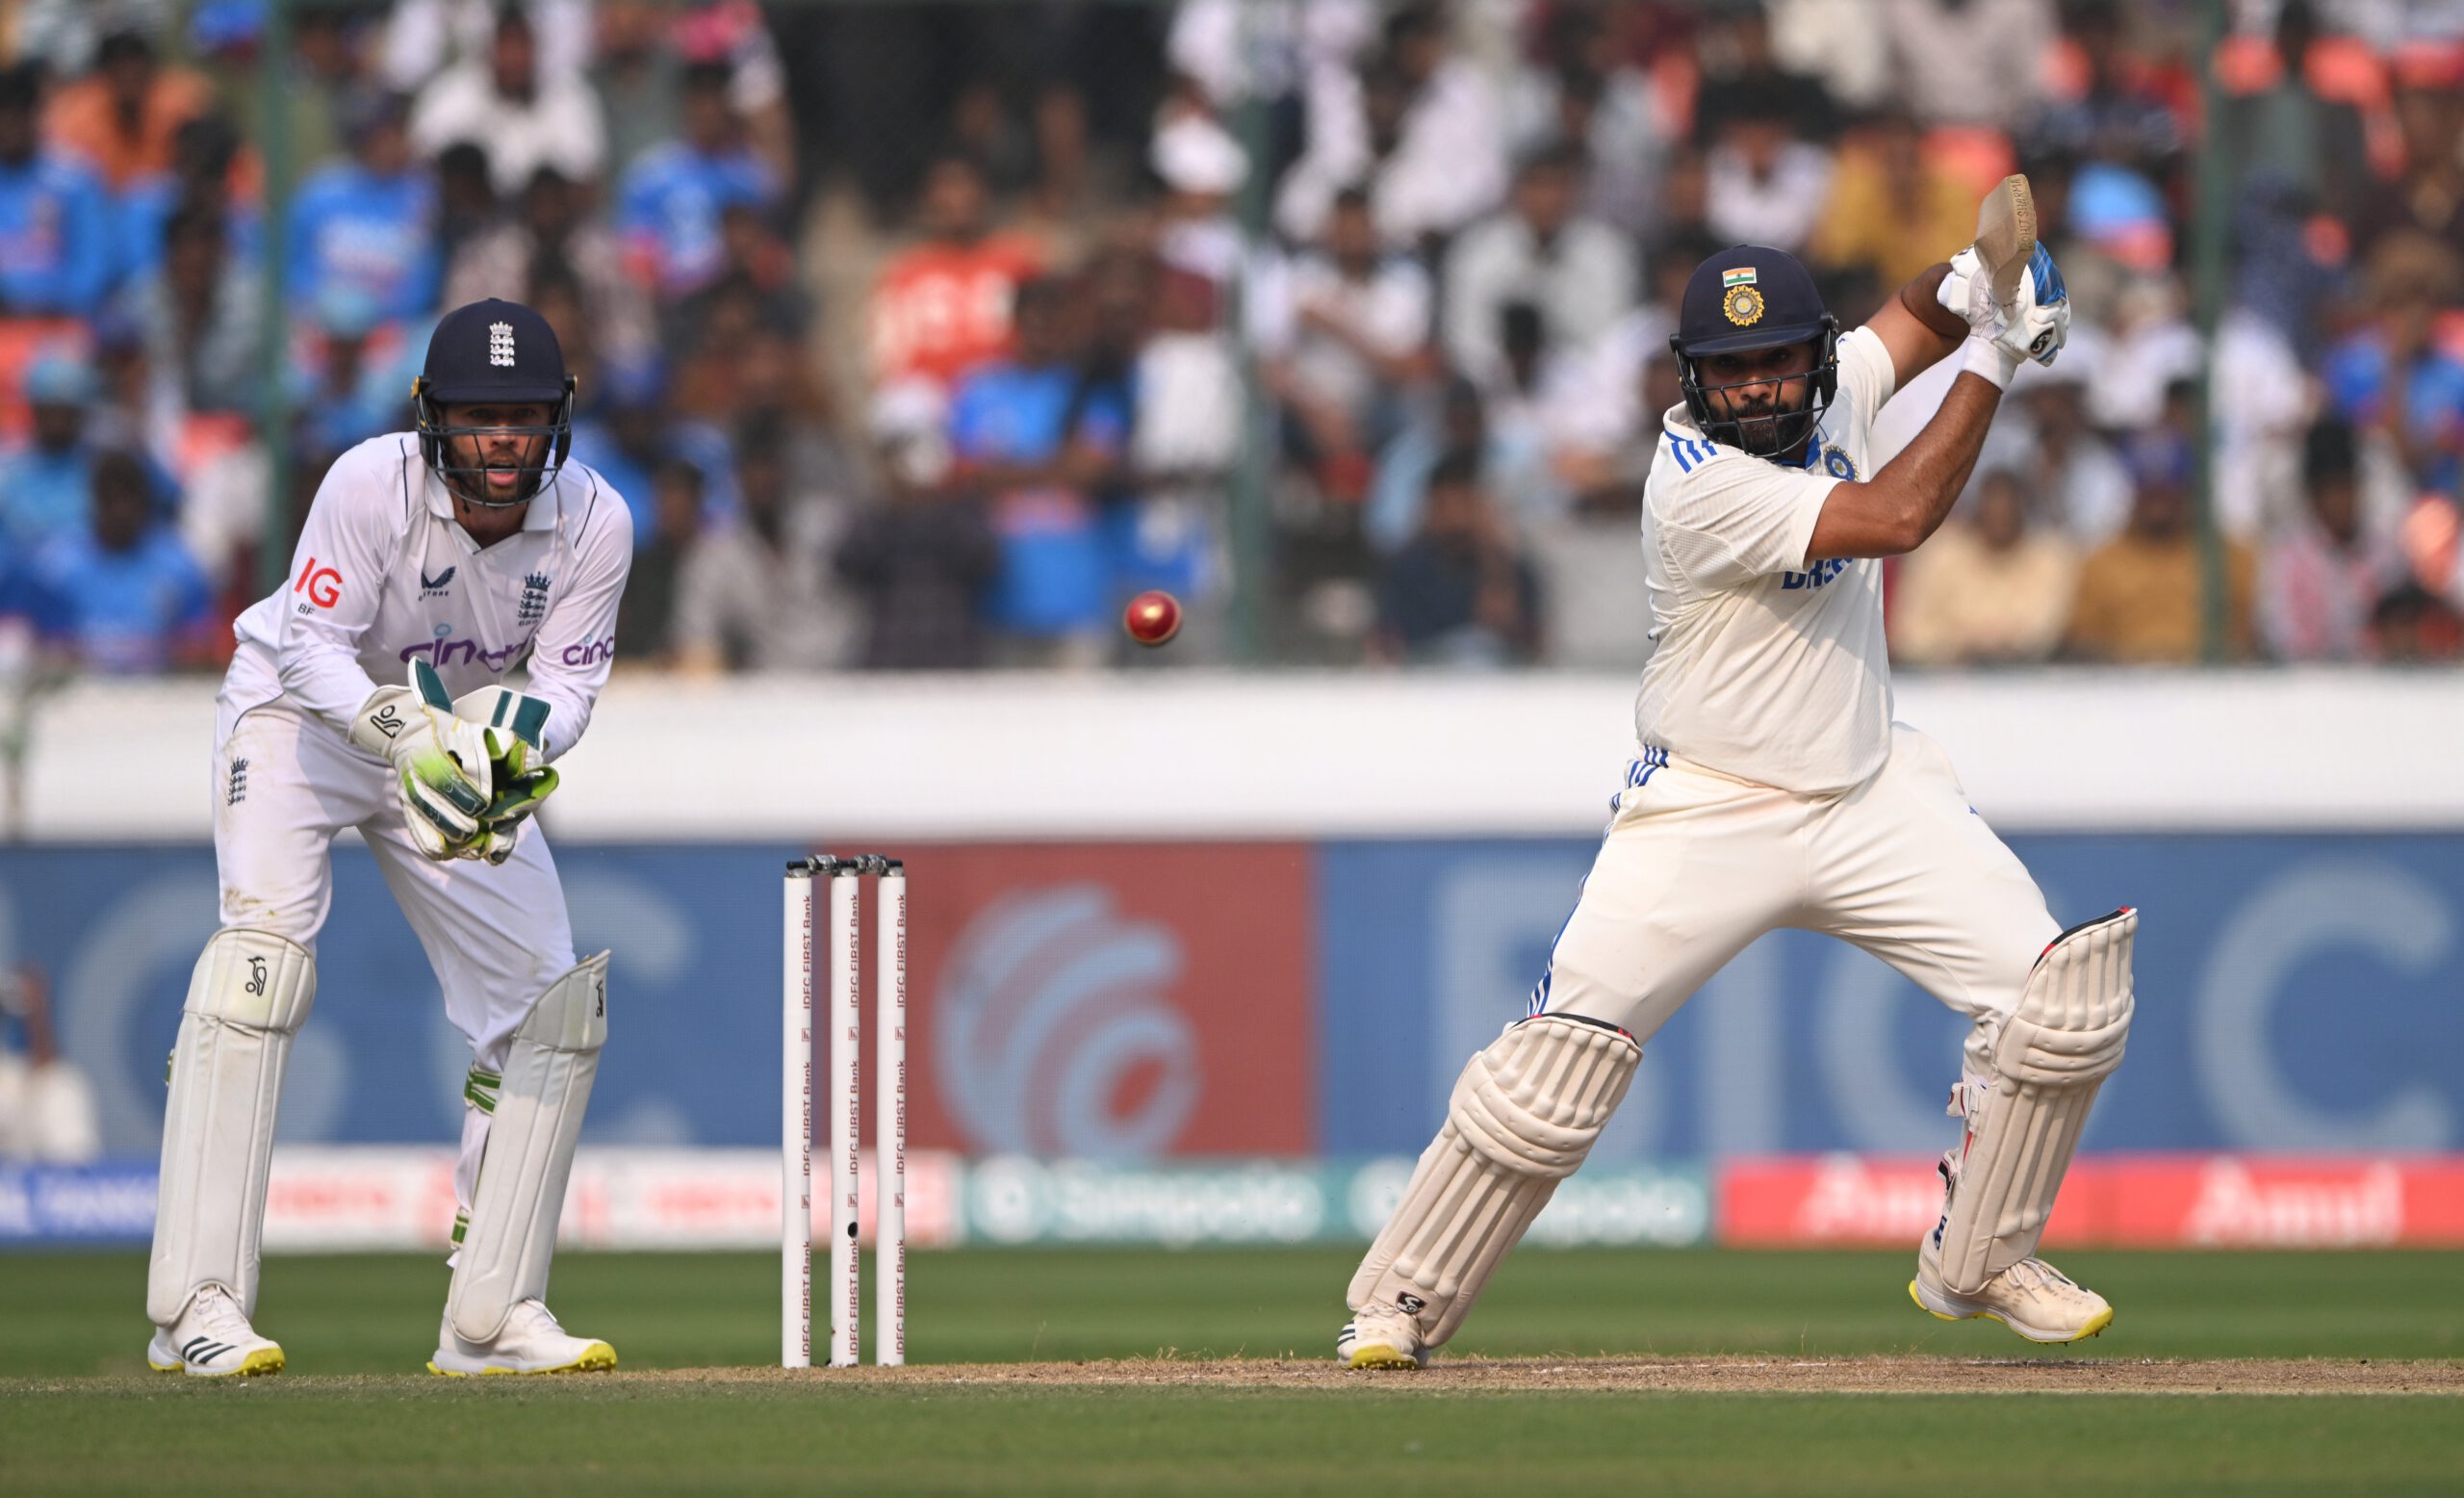 England wicketkeeper Ben Foakes looks on as India batsman Rohit Sharma cuts a ball